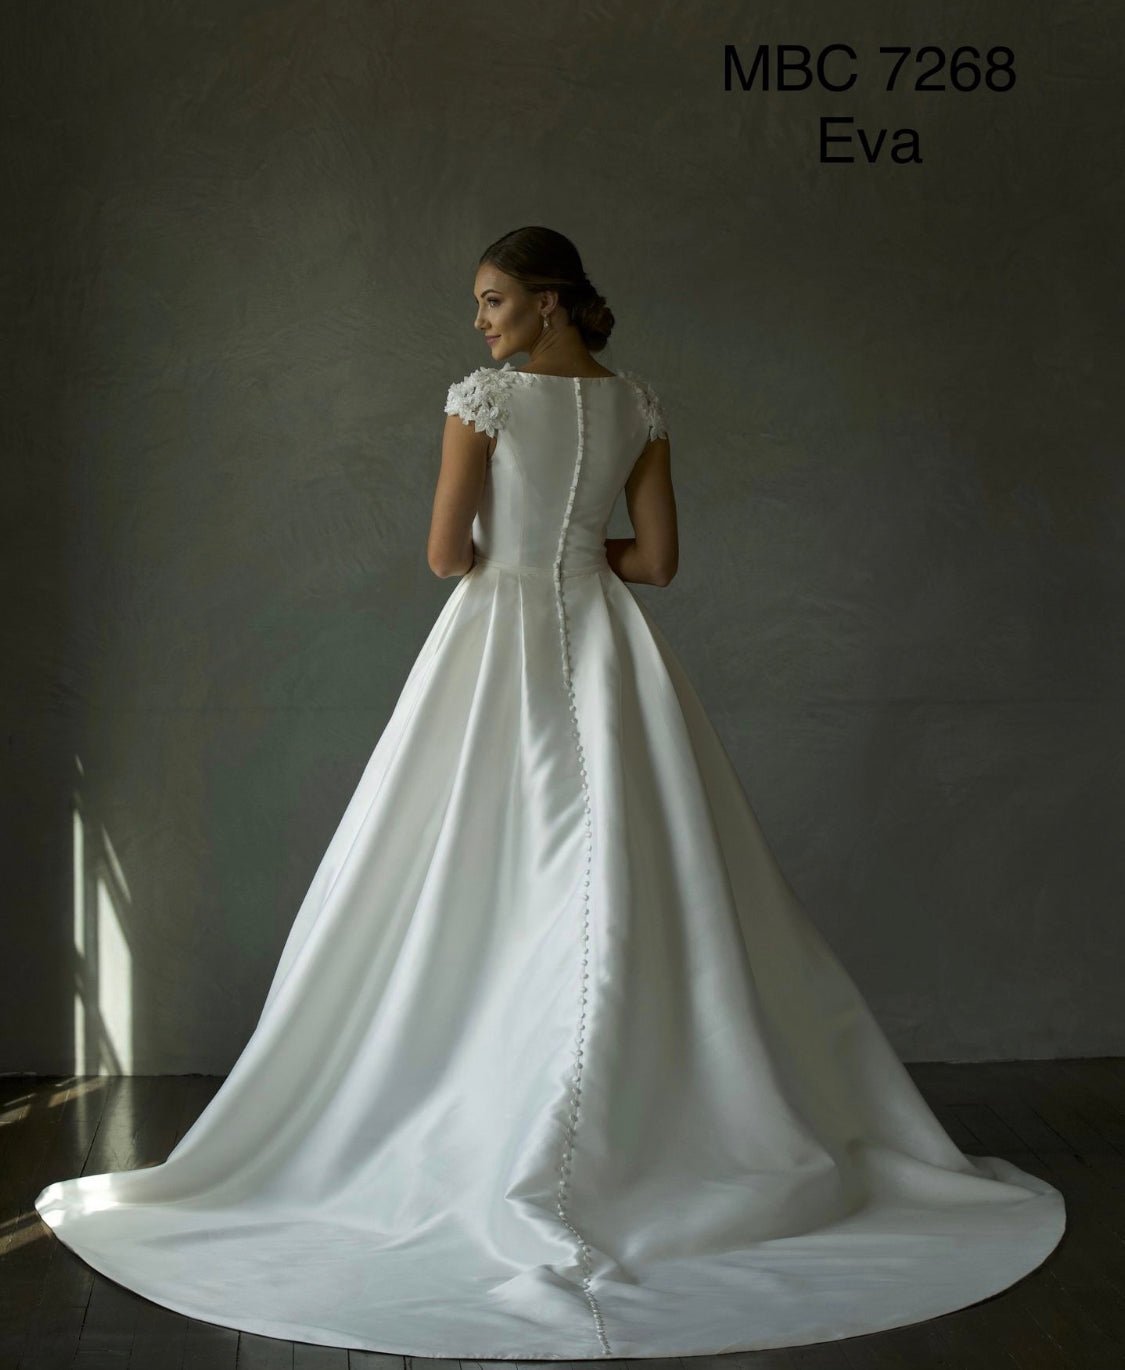 Eva MBC 7268 - Esila Bridal